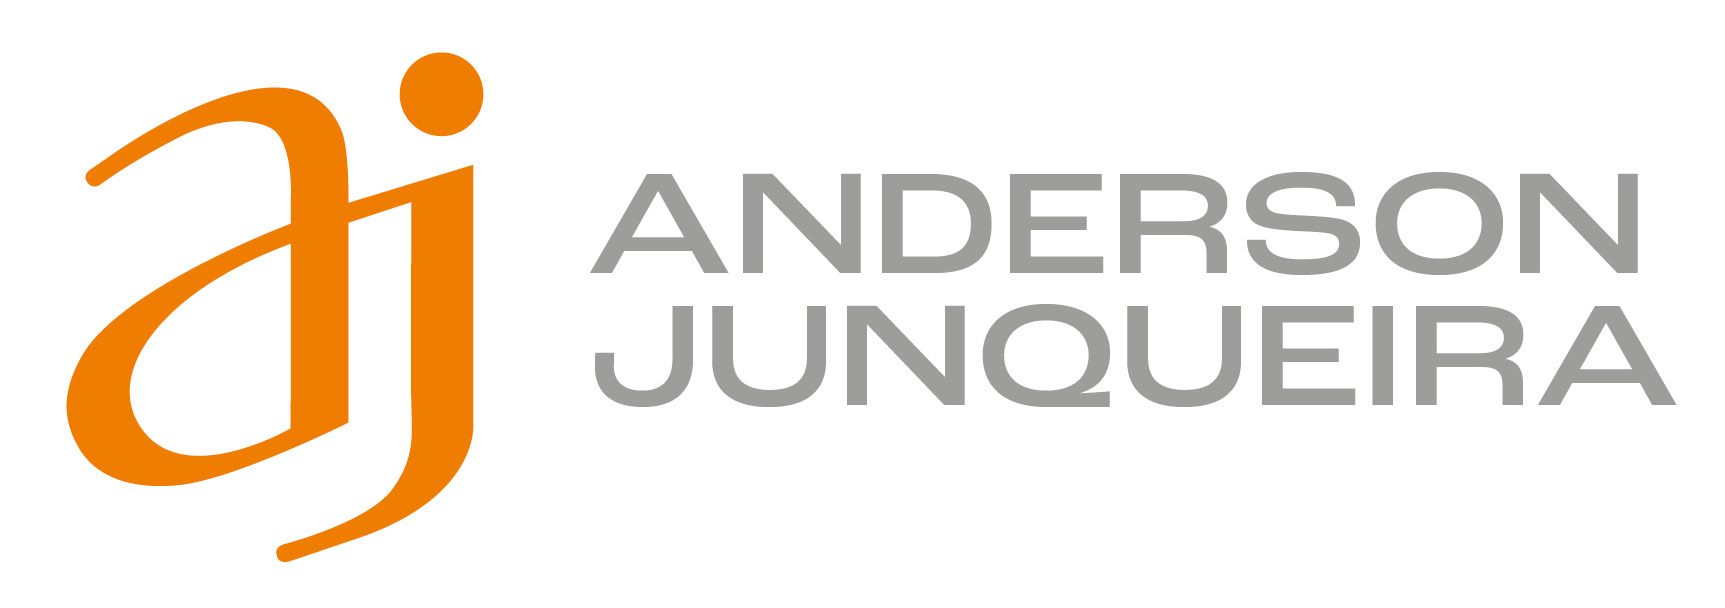 Anderson Junqueira